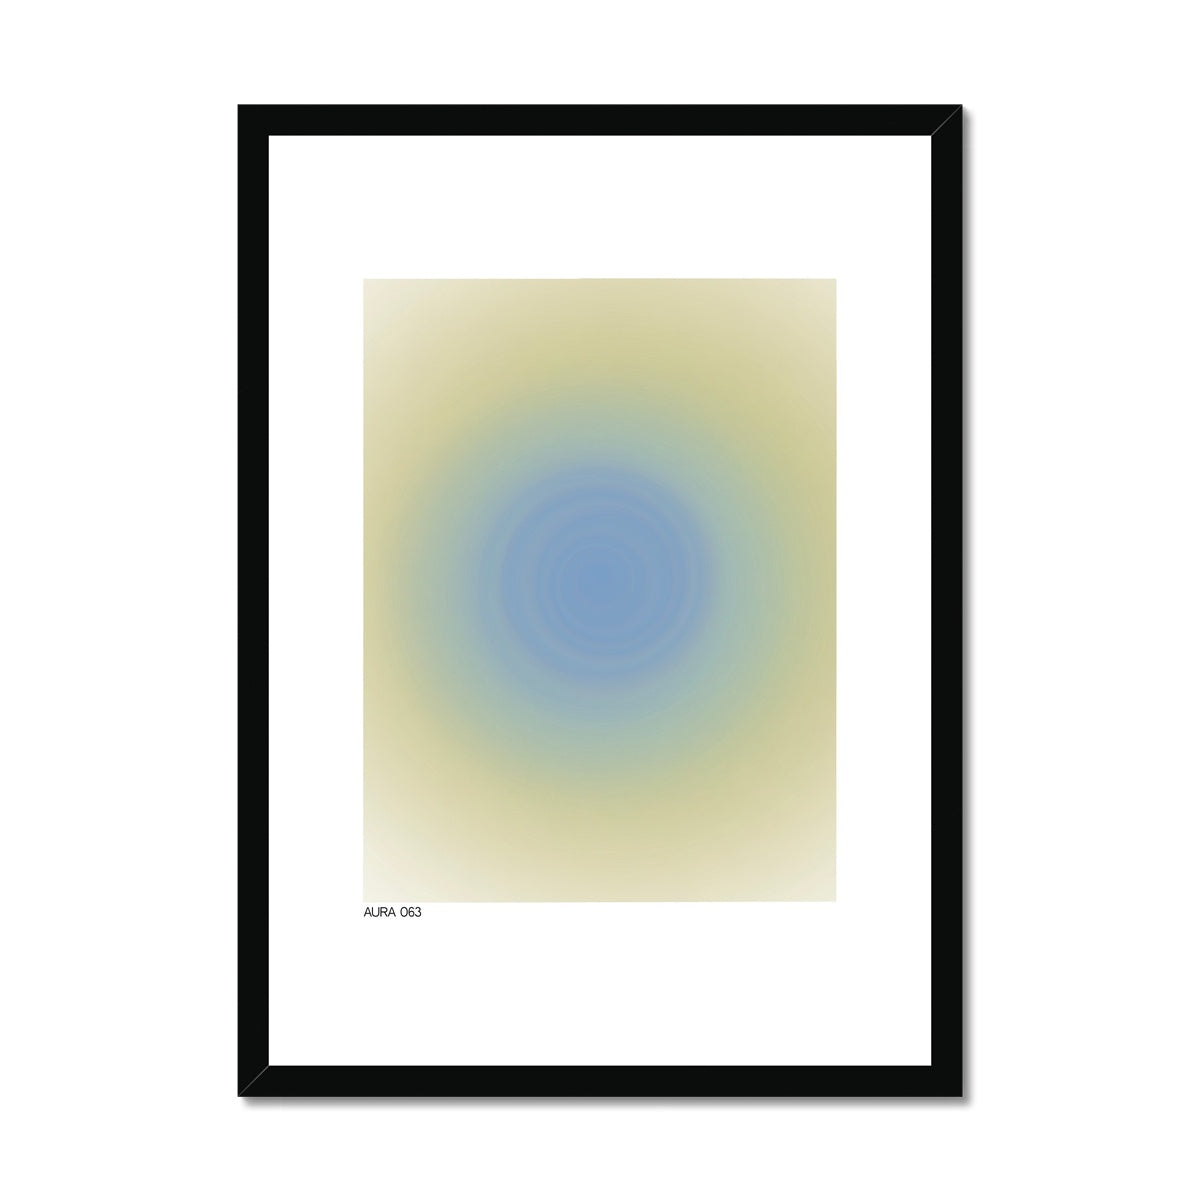 aura 063 Framed & Mounted Print